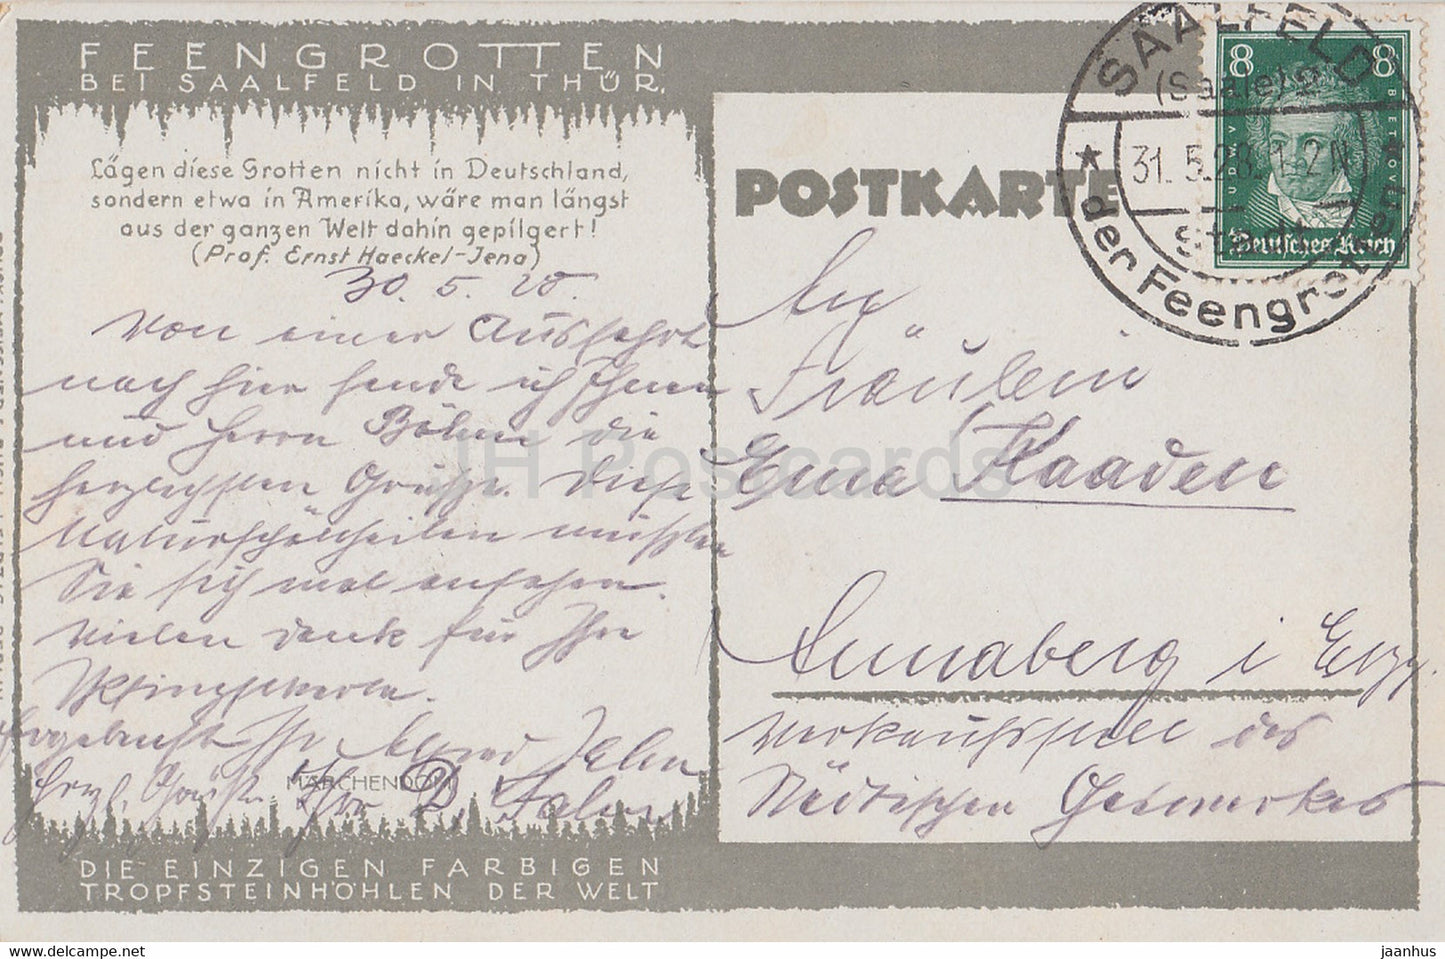 Feengrotten von Saalfeld in Th - Marchendom - cave - old postcard - 1928 - Germany - used